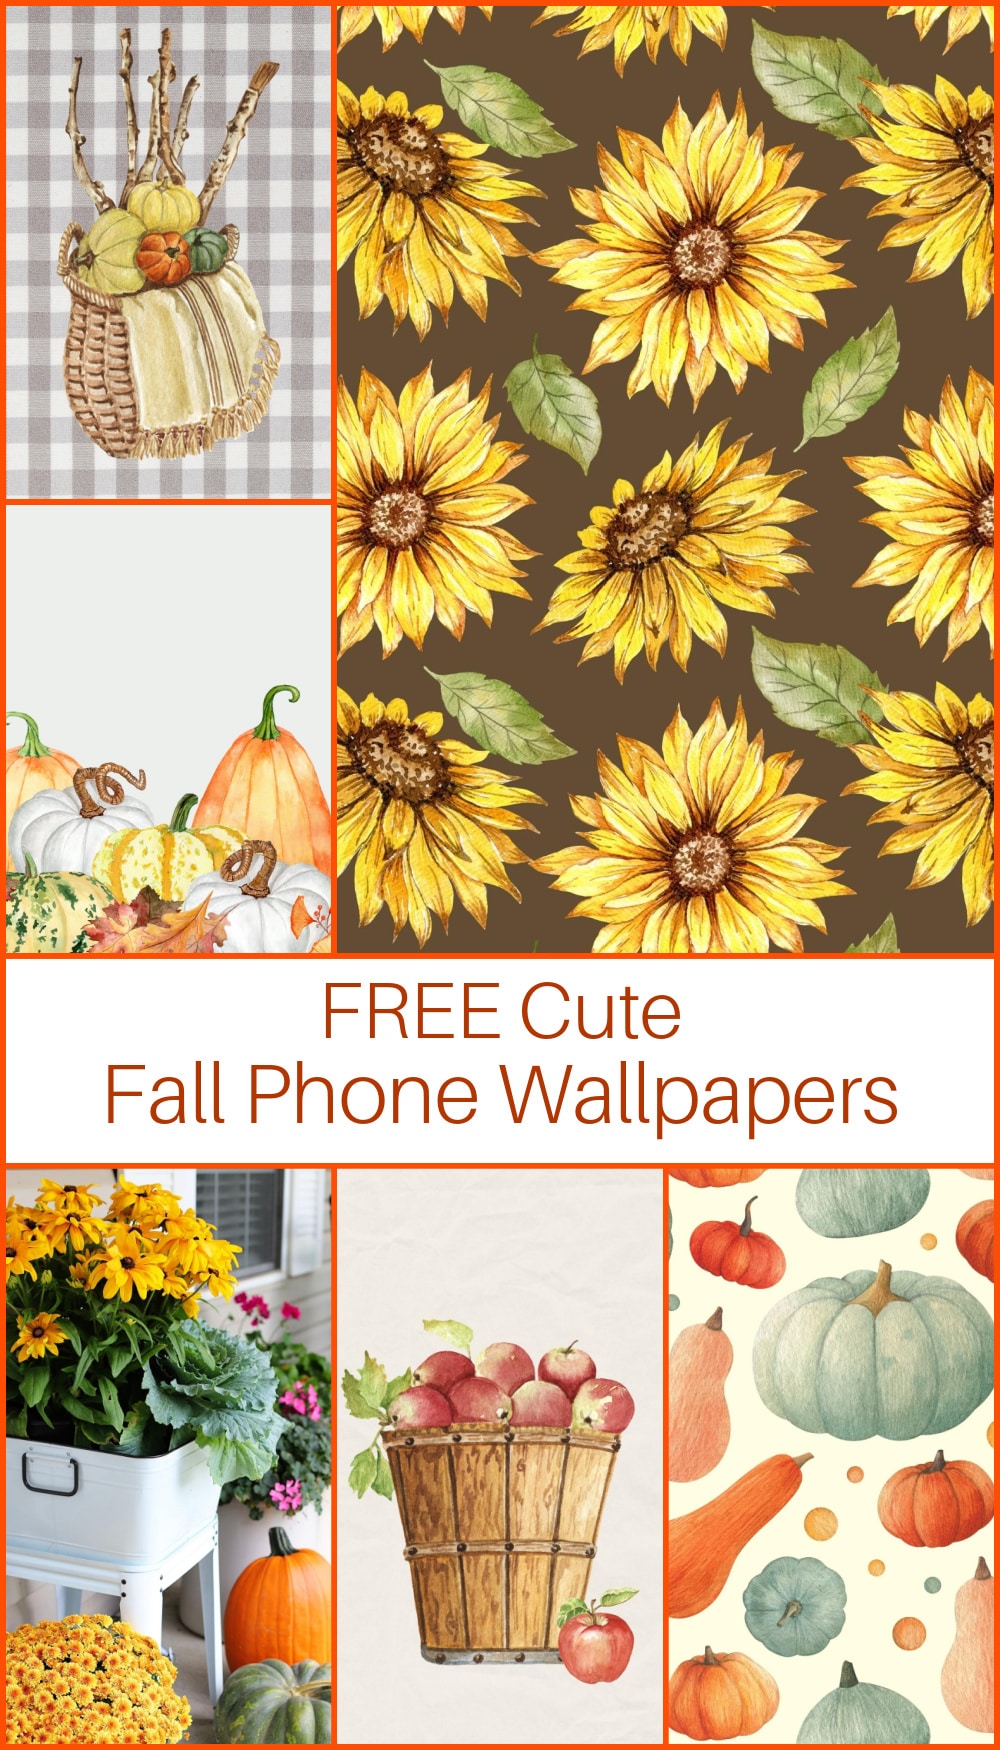 Abstract Autumn Fantasy Fall Wallpaper Free Stock Photo | picjumbo